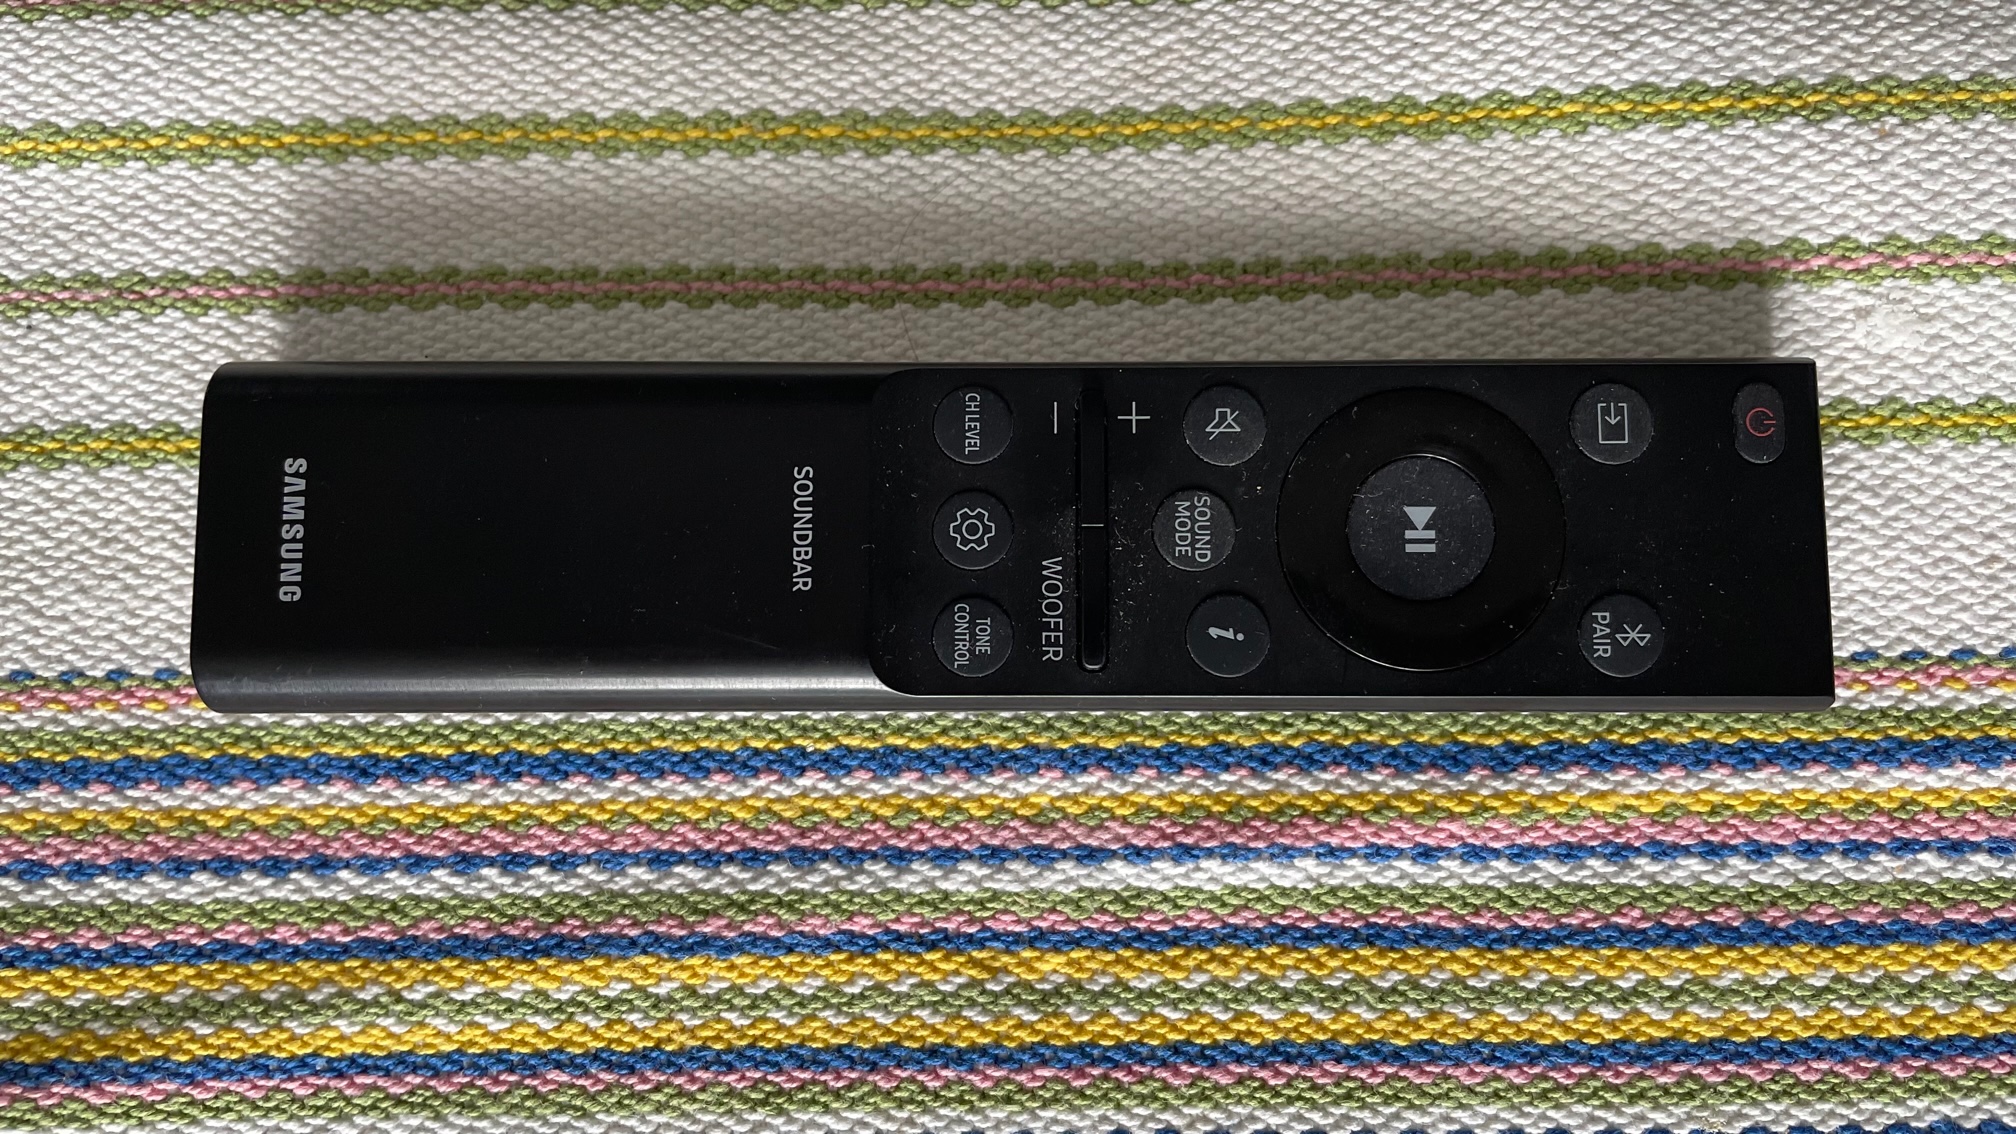 The remote of the Samsung HW-Q990C soundbar.